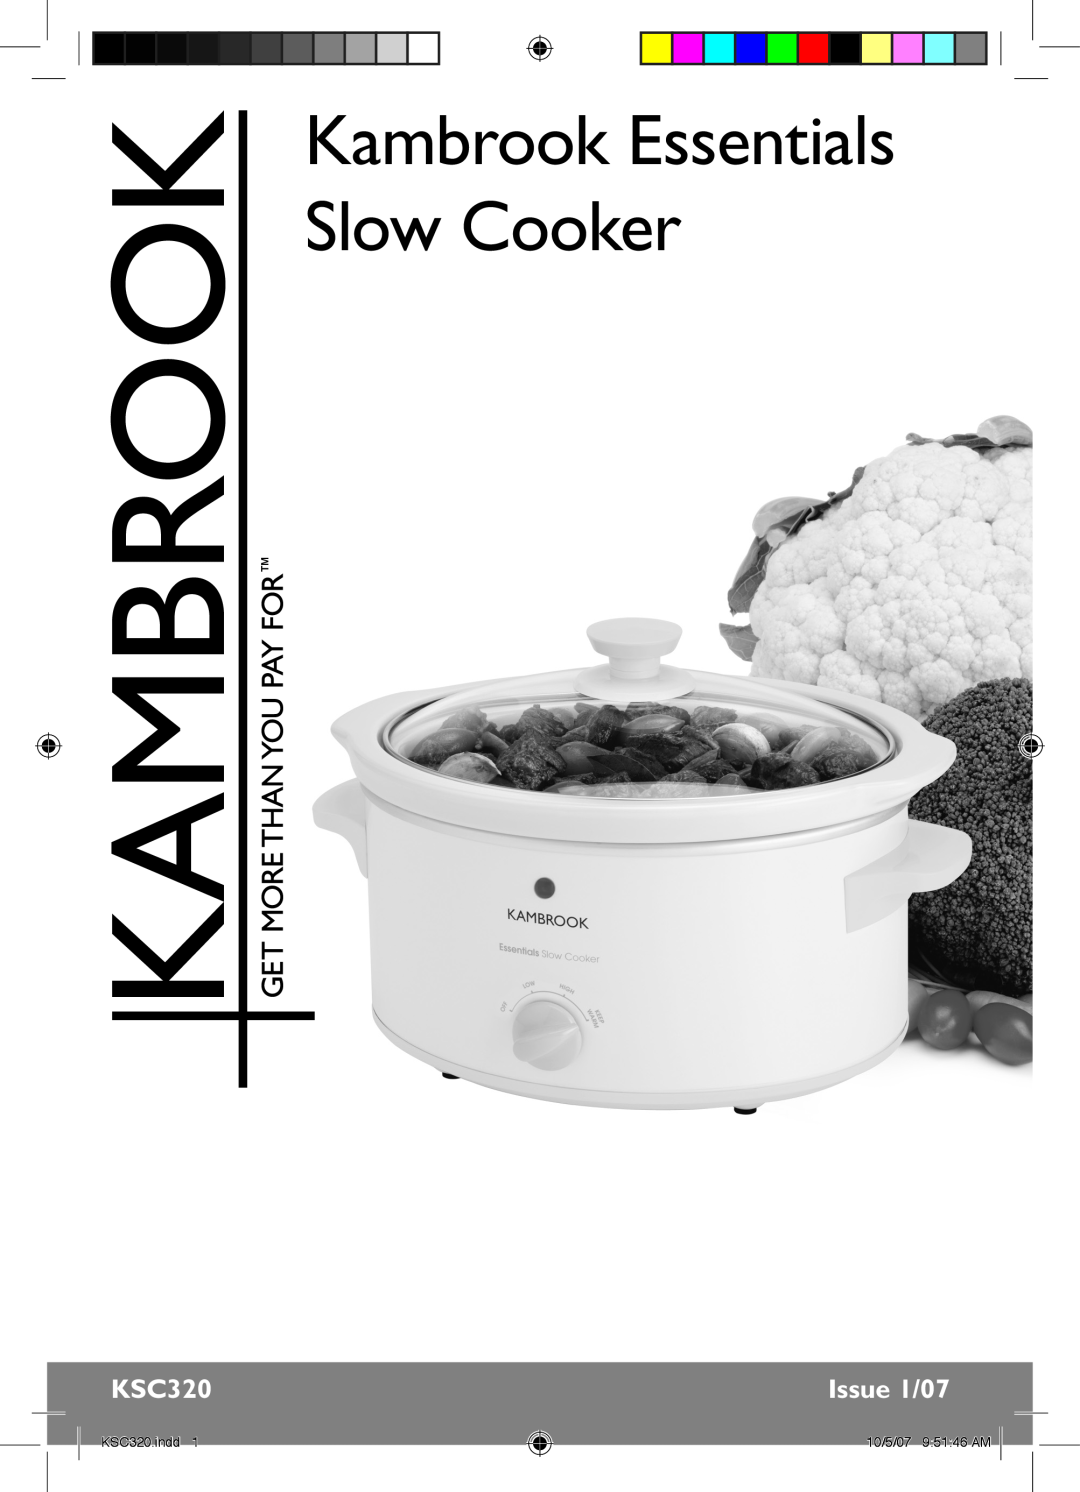 Kambrook manual Kambrook Essentials Slow Cooker, Issue 1/07, KSC320.indd, 10/5/07 9 51 46 AM 